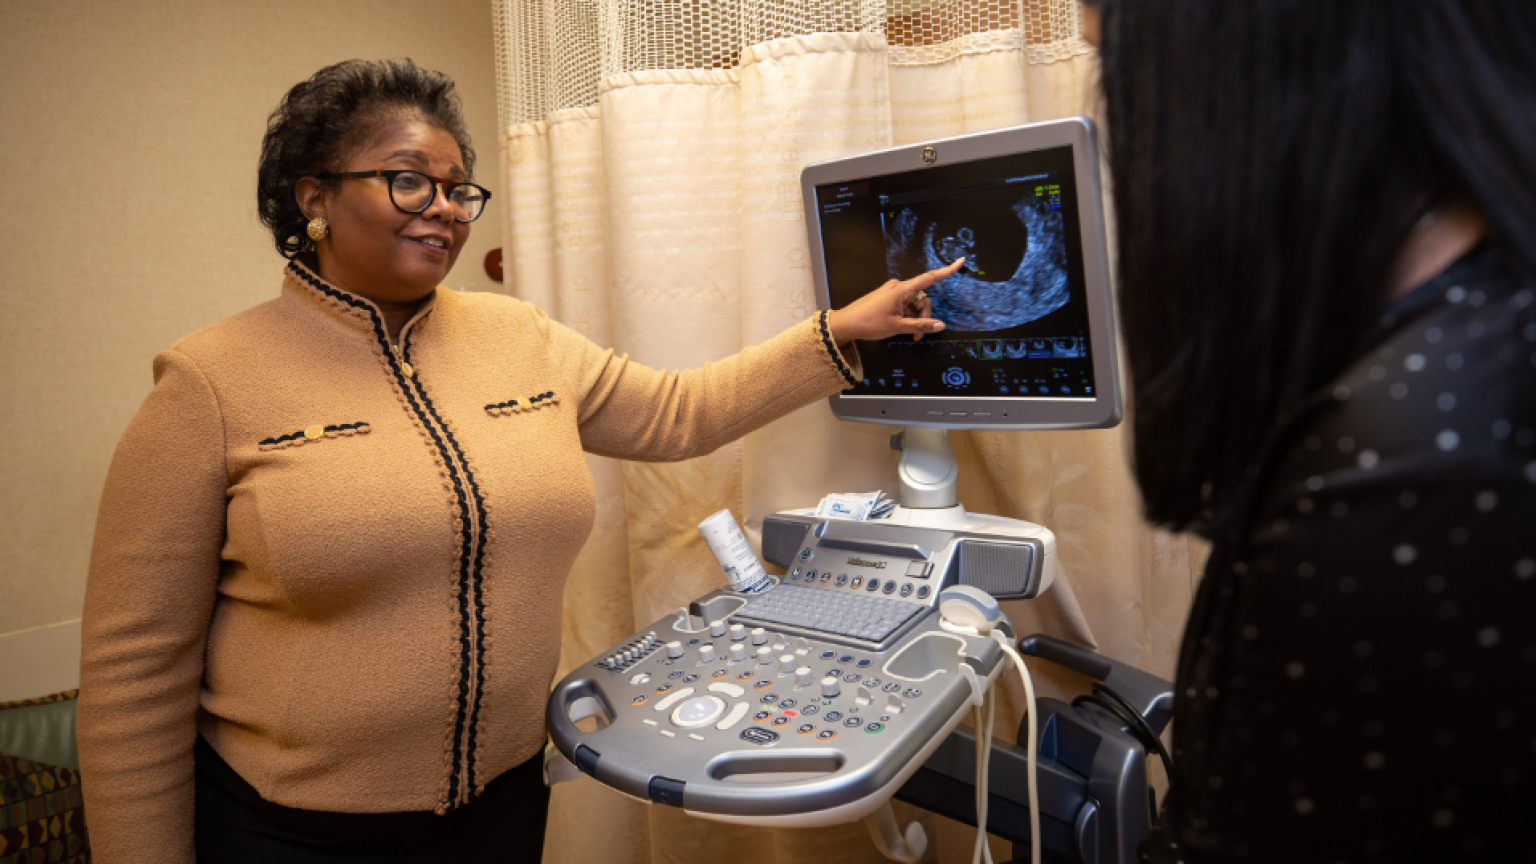 Dr. Marsh Patient Ultrasound